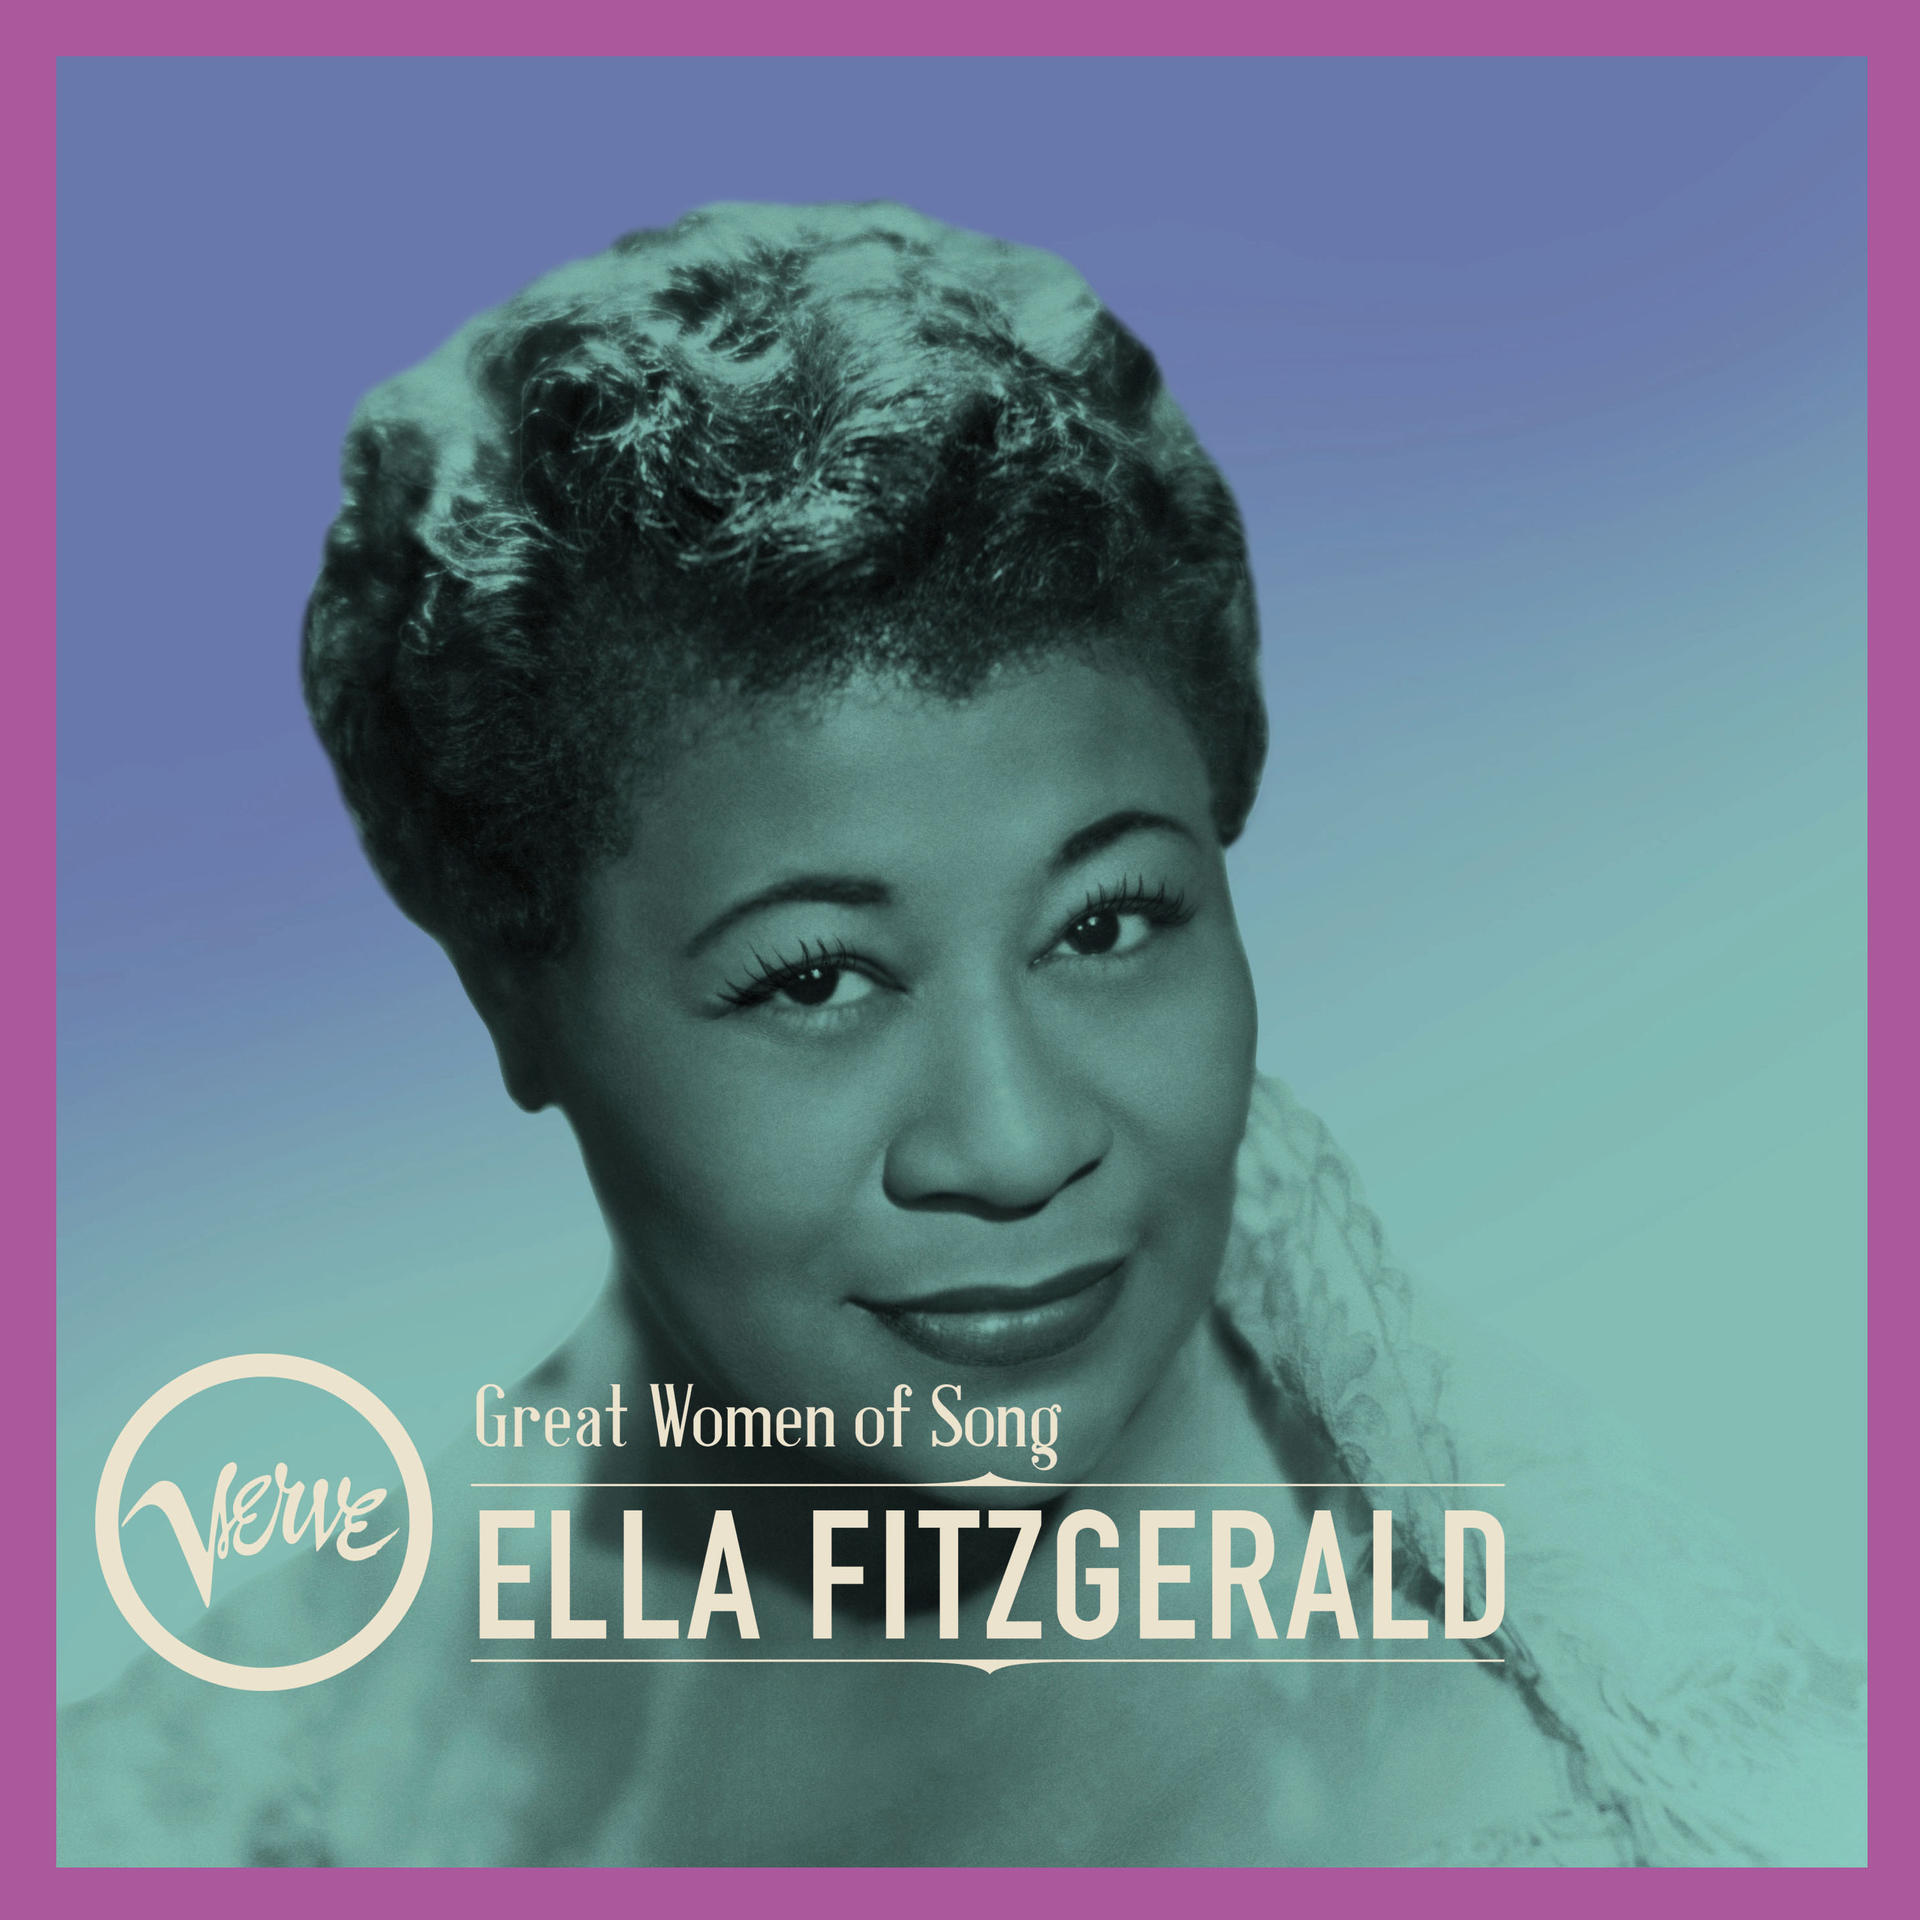 (Vinyl) Ella - Women of - Fitzgerald Song Great